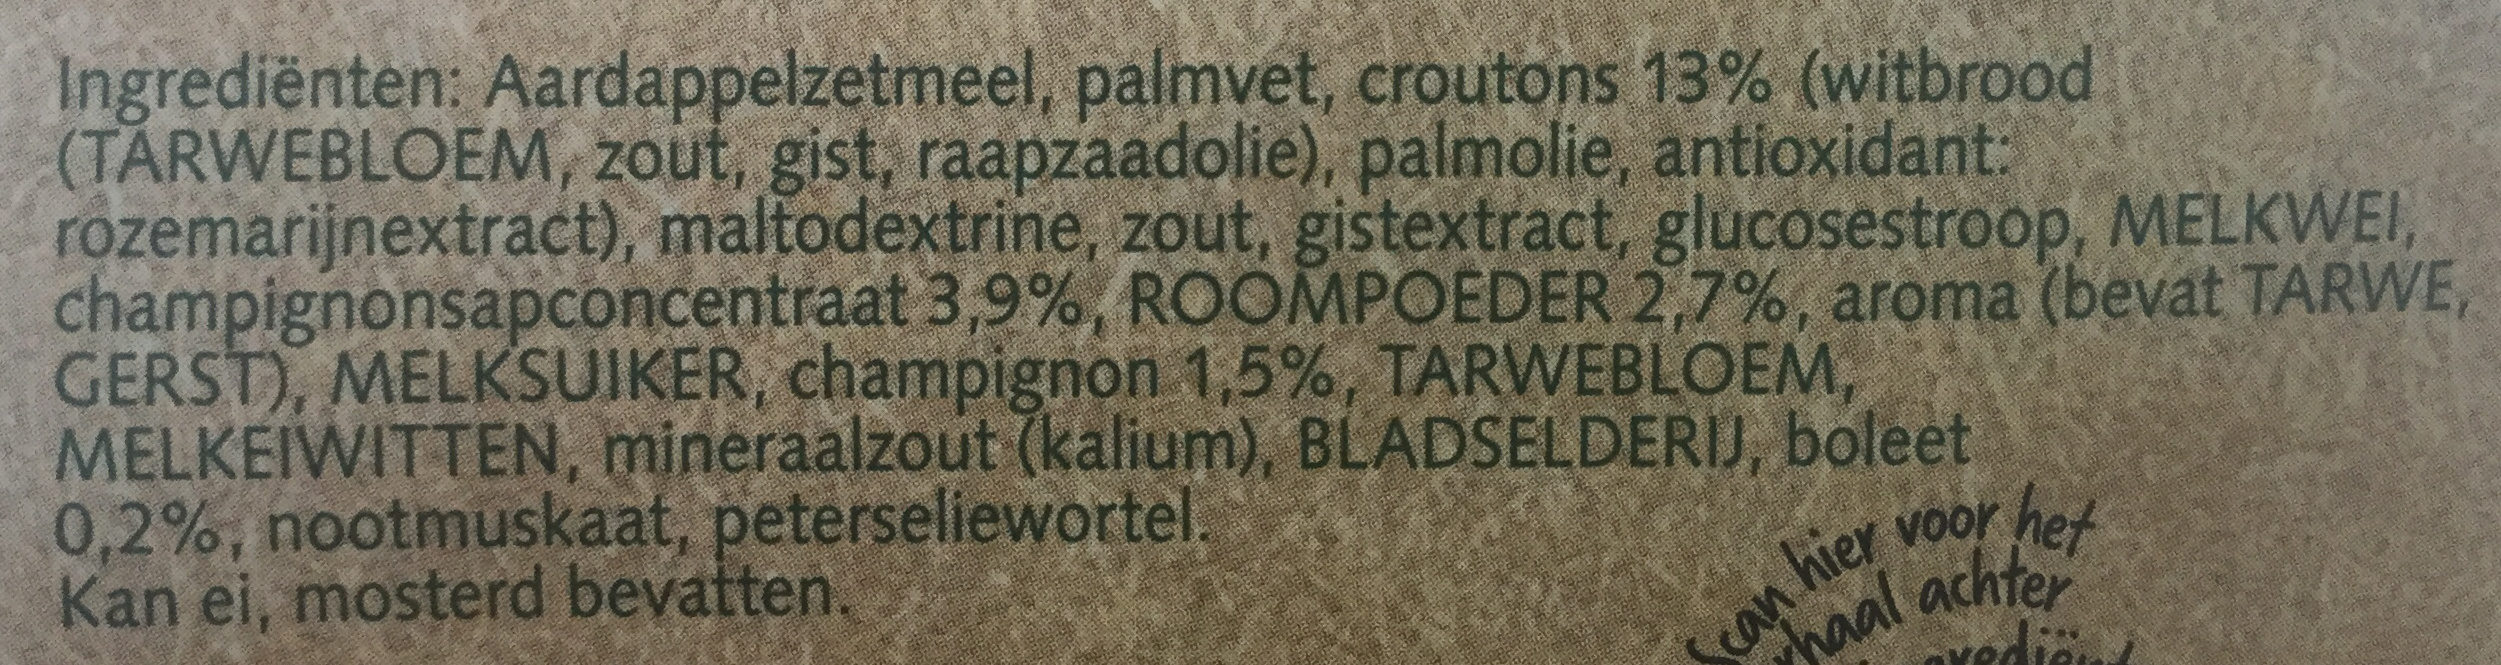 Champignon creme - Ingredients - nl